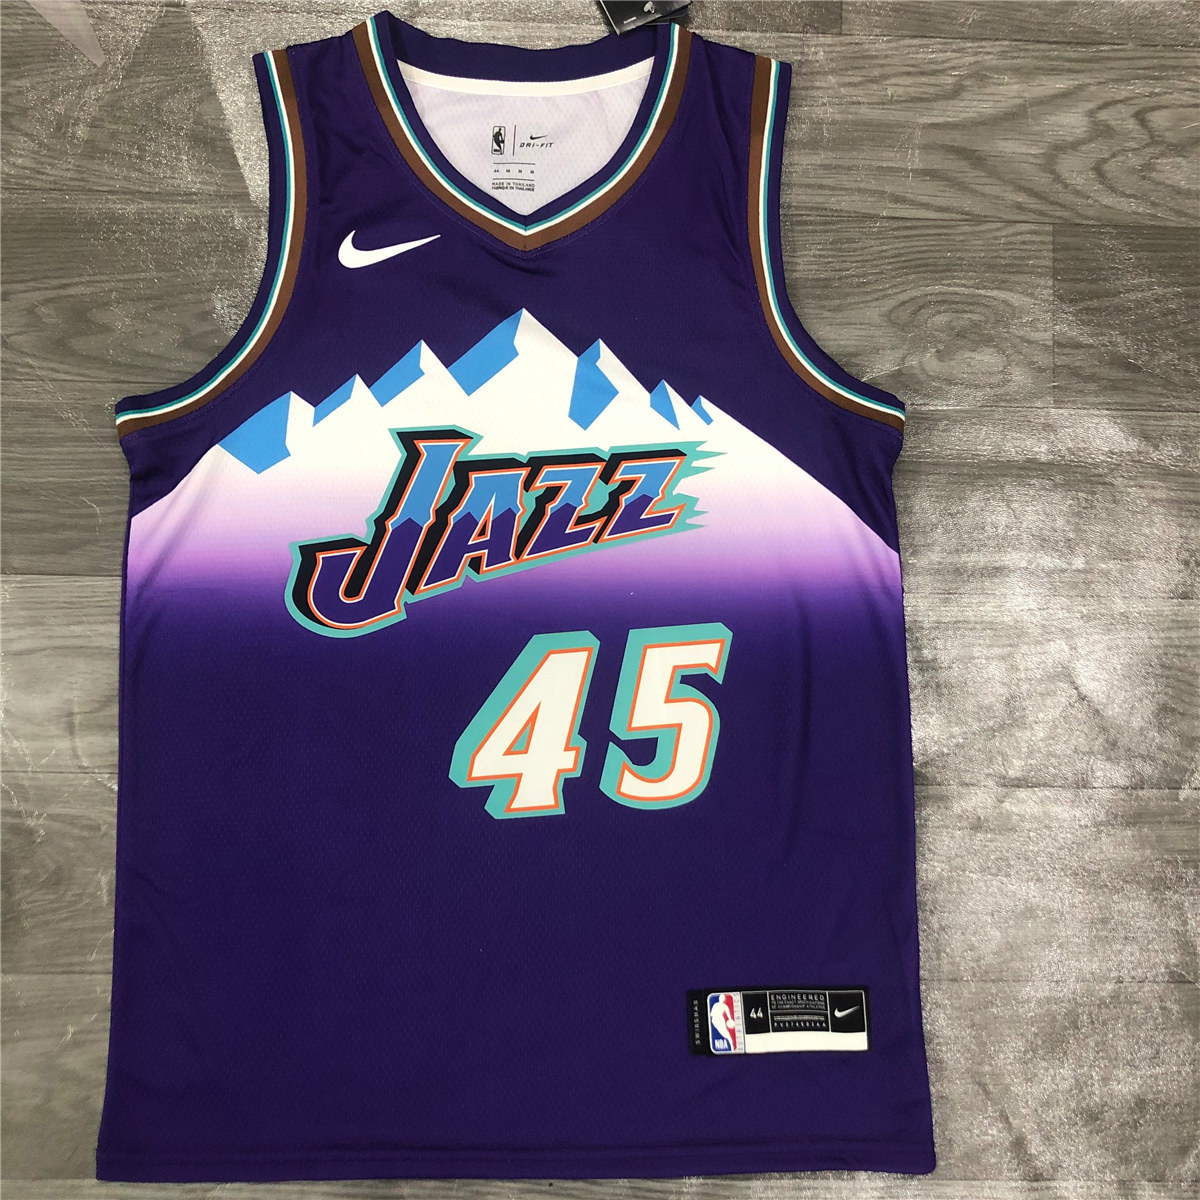 US 21.80 Mens Utah Jazz Nike 2020/21 Purple Swingman Jersey